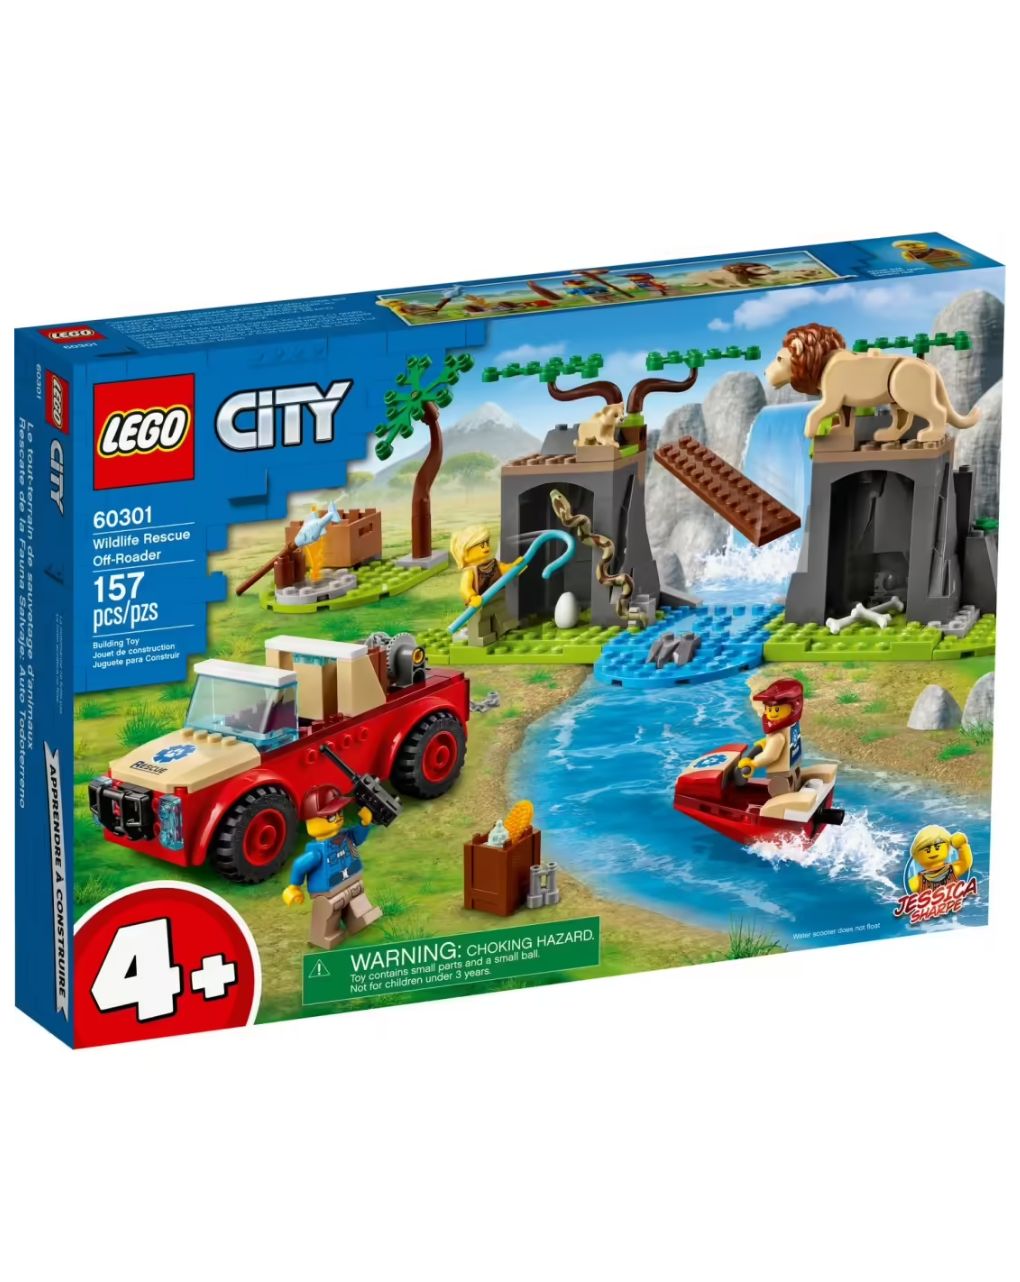 Lego city wildlife εκτός δρόμου όχημα διάσωσης άγριων ζώων  60301